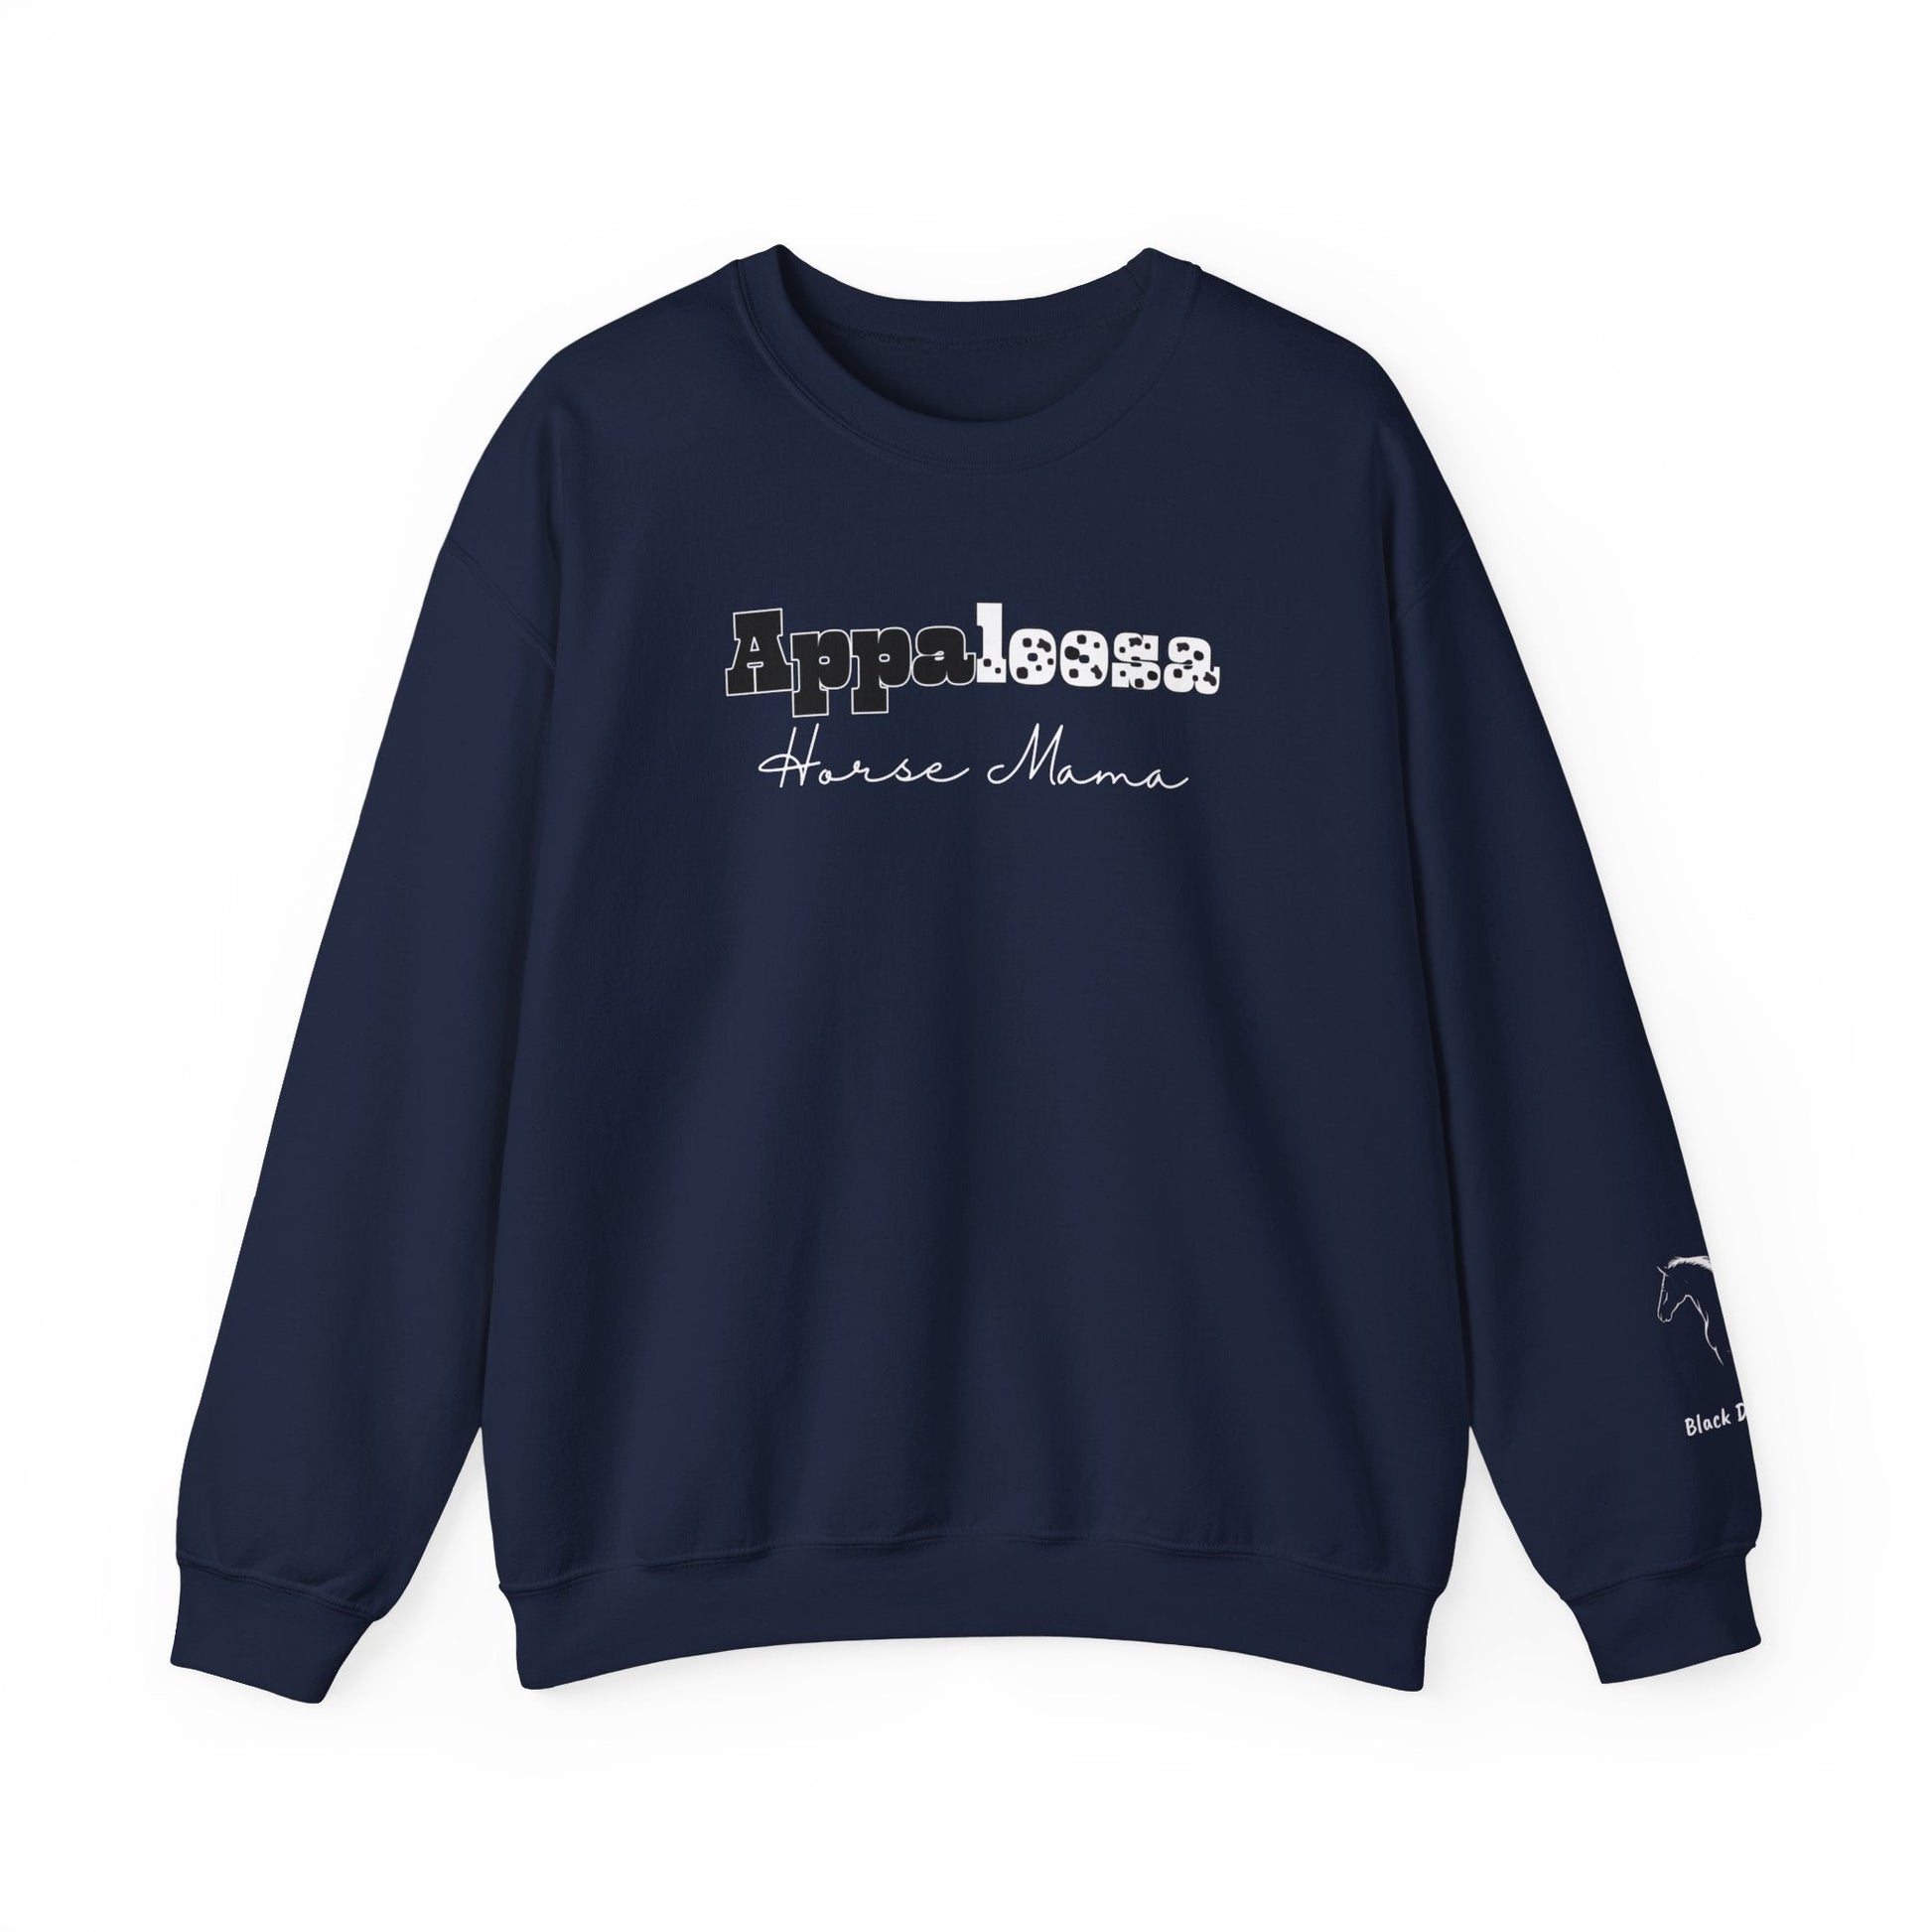 Personalized Appaloosa Horse Mama Sweatshirt with Horse Name on Sleeve - FlooredByArt